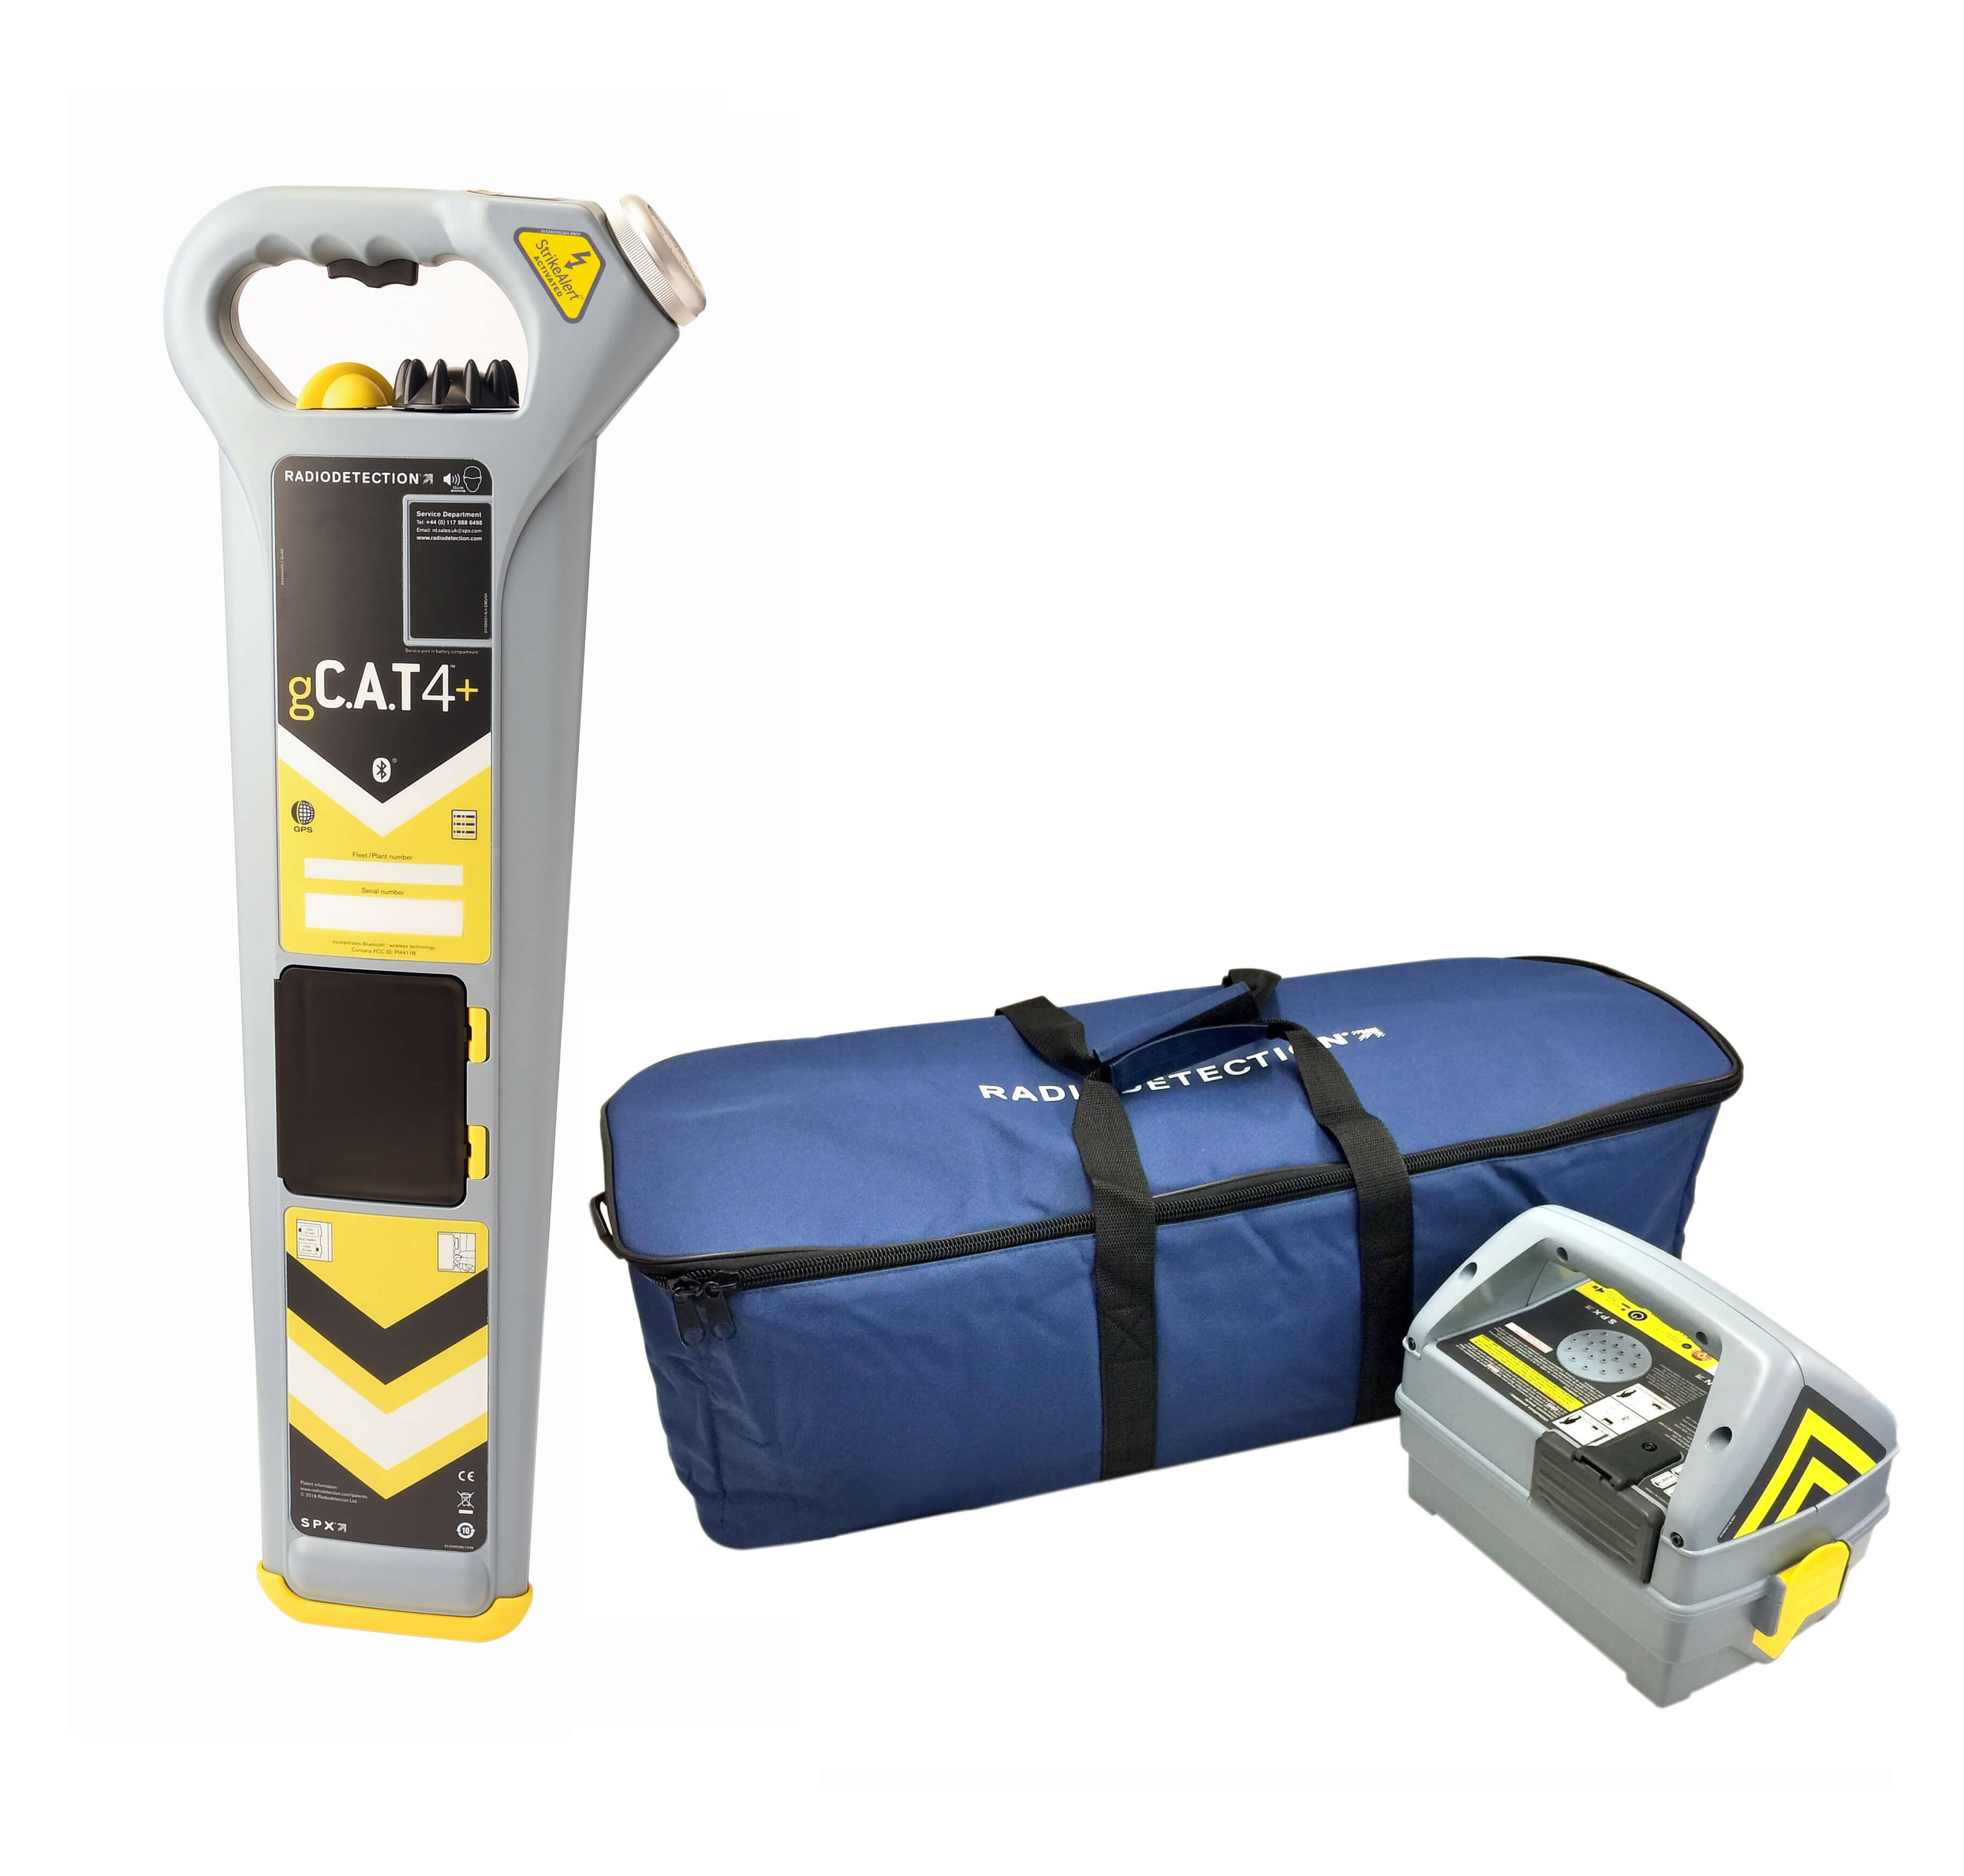 Radiodetection gCAT4+ Kit with Genny4 and Bag